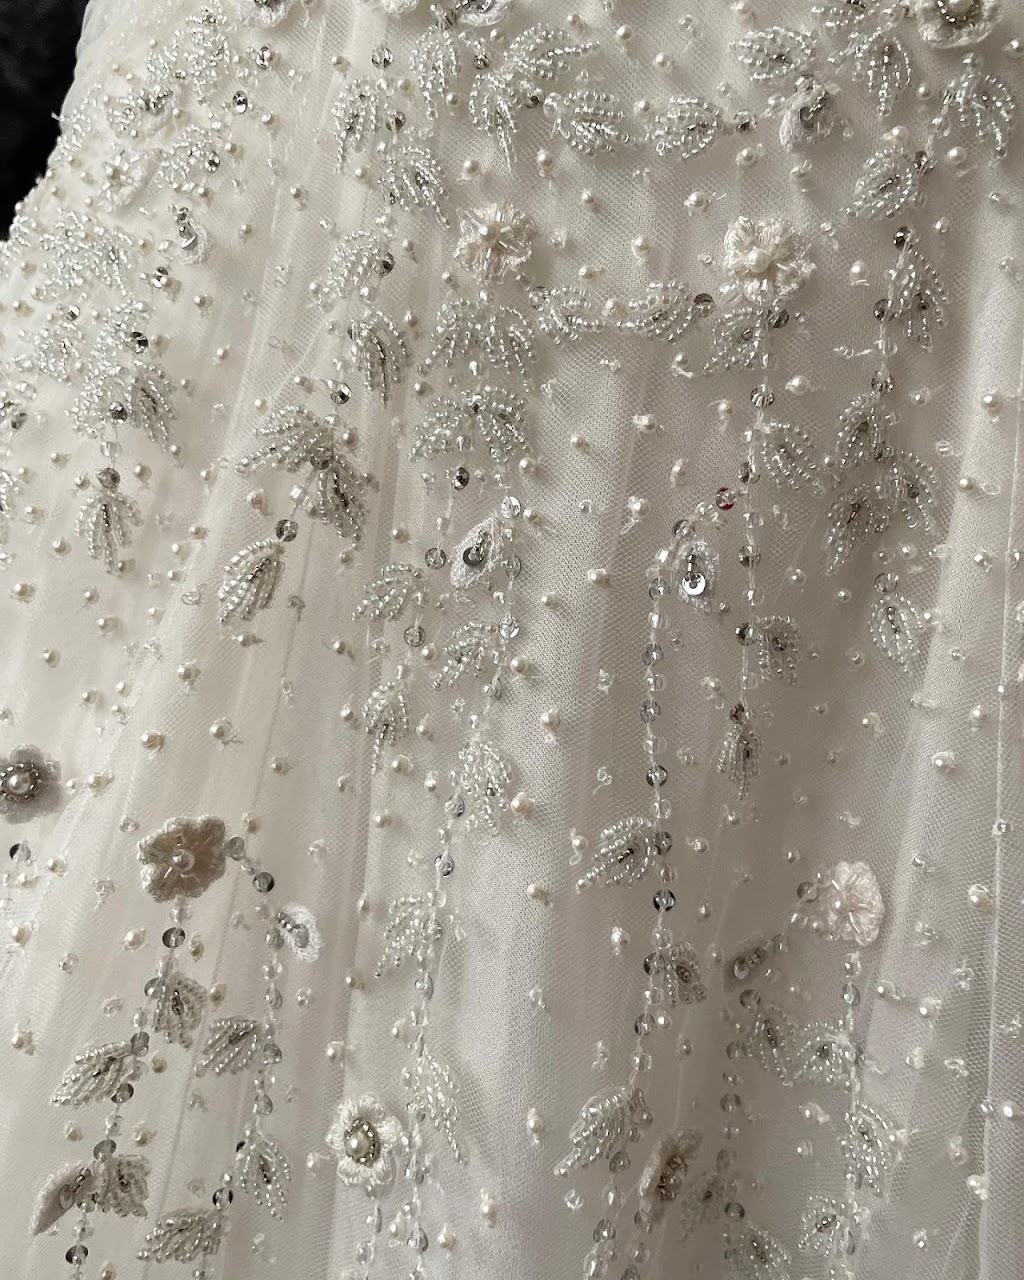 A.Cherie Couture : Custom Wedding Dresses and Alterations | 8000 Fair Oaks Pkwy Suite 3101, Fair Oaks Ranch, TX 78015, USA | Phone: (210) 363-2935